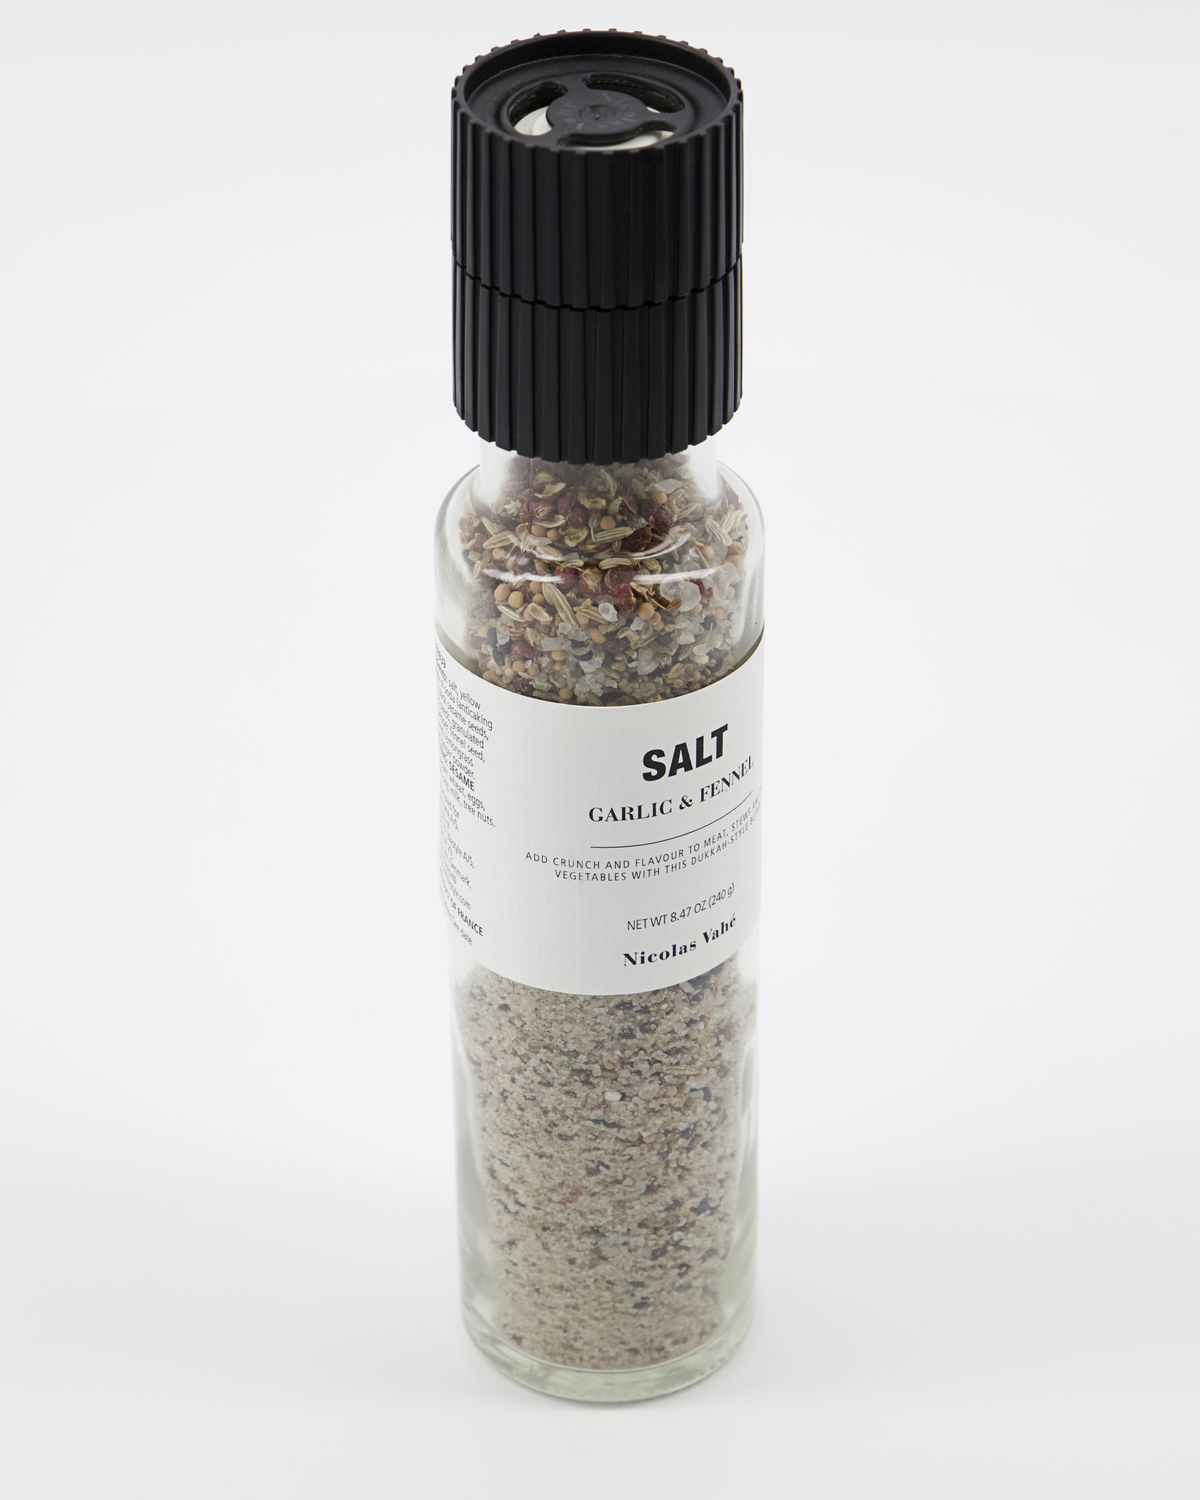 Nicolas Vahé Salt, garlic & fennel